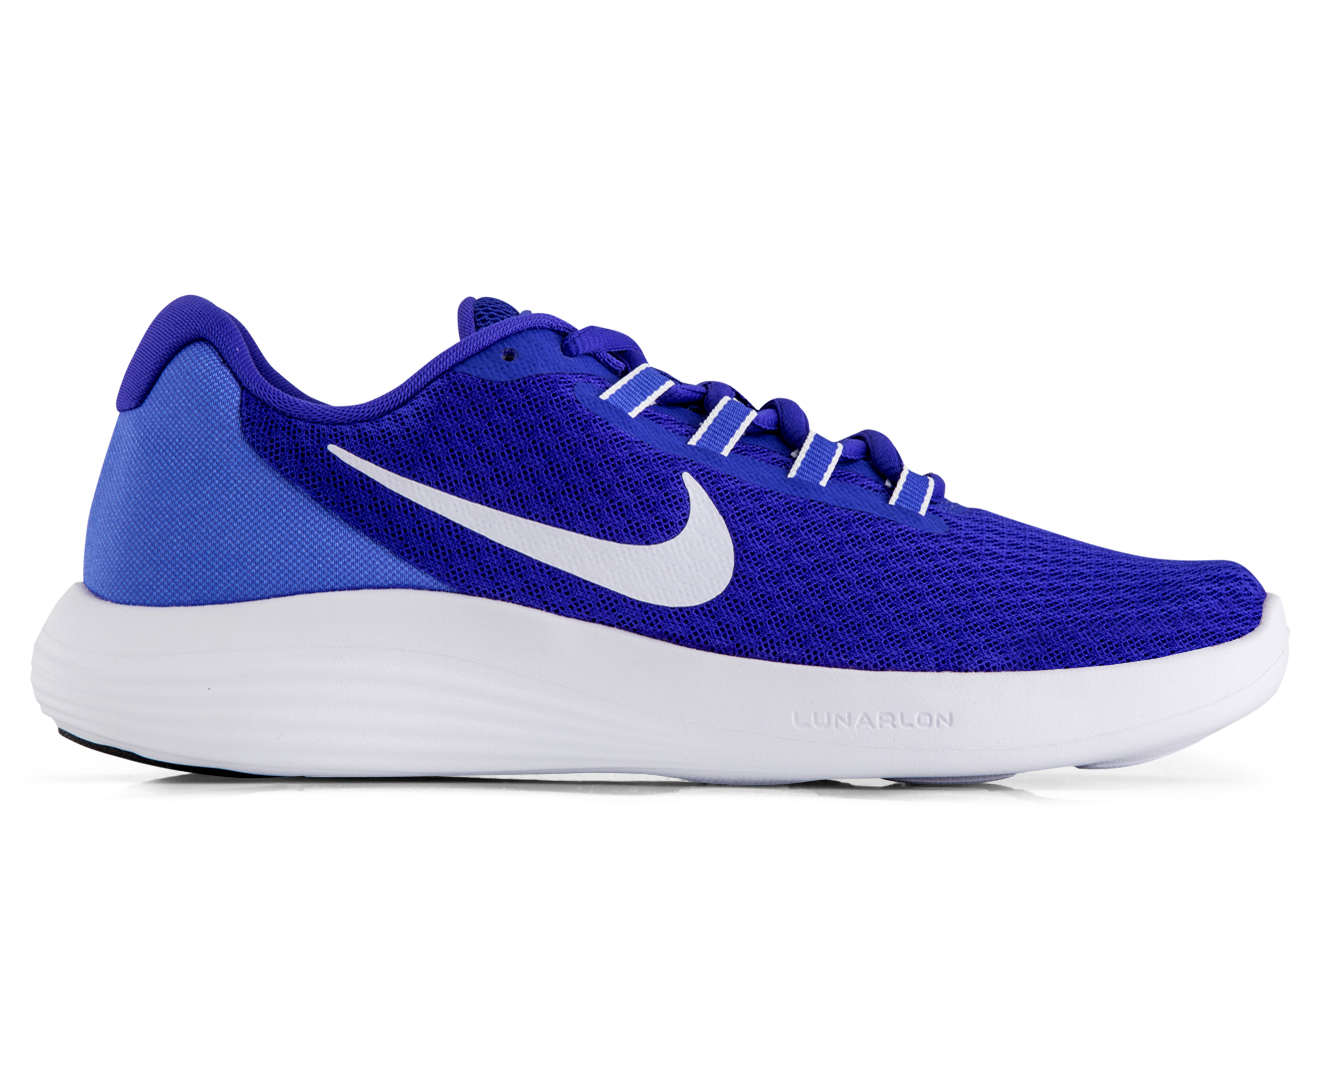 Nike Women's Lunarconverge Shoe - Blue/White | Catch.co.nz